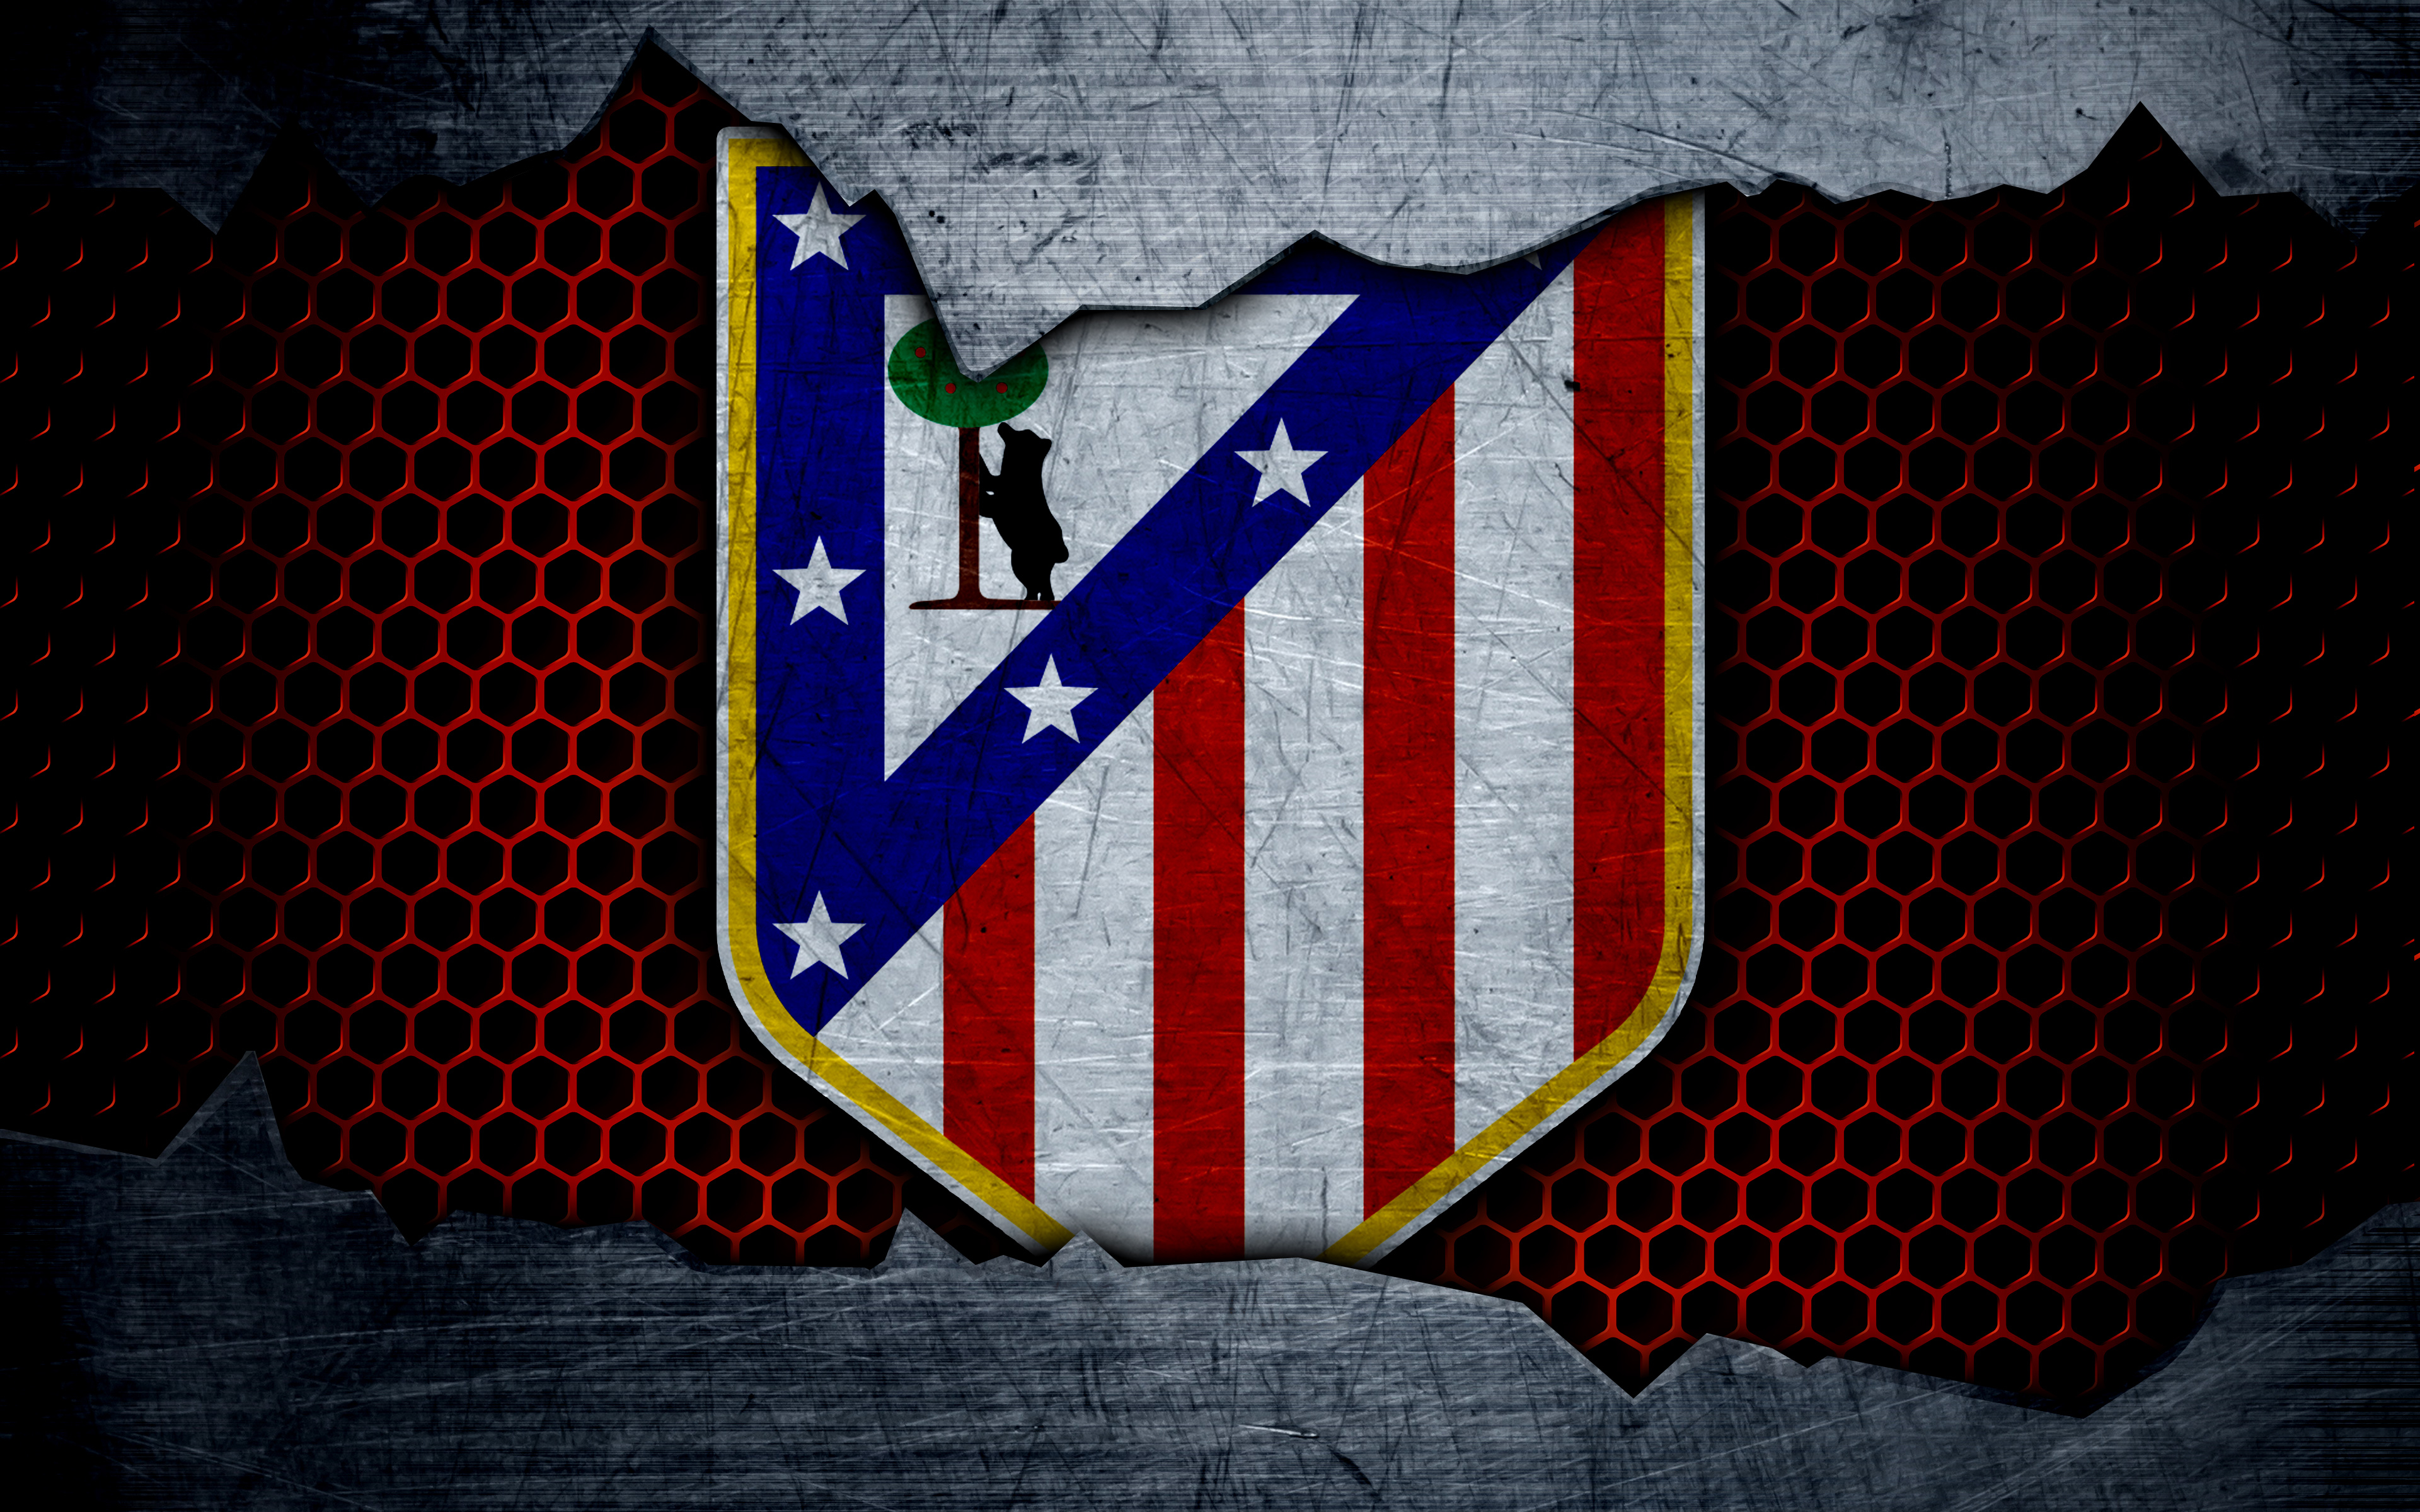 Atletico Madrid Emblem Logo Soccer 3840x2400